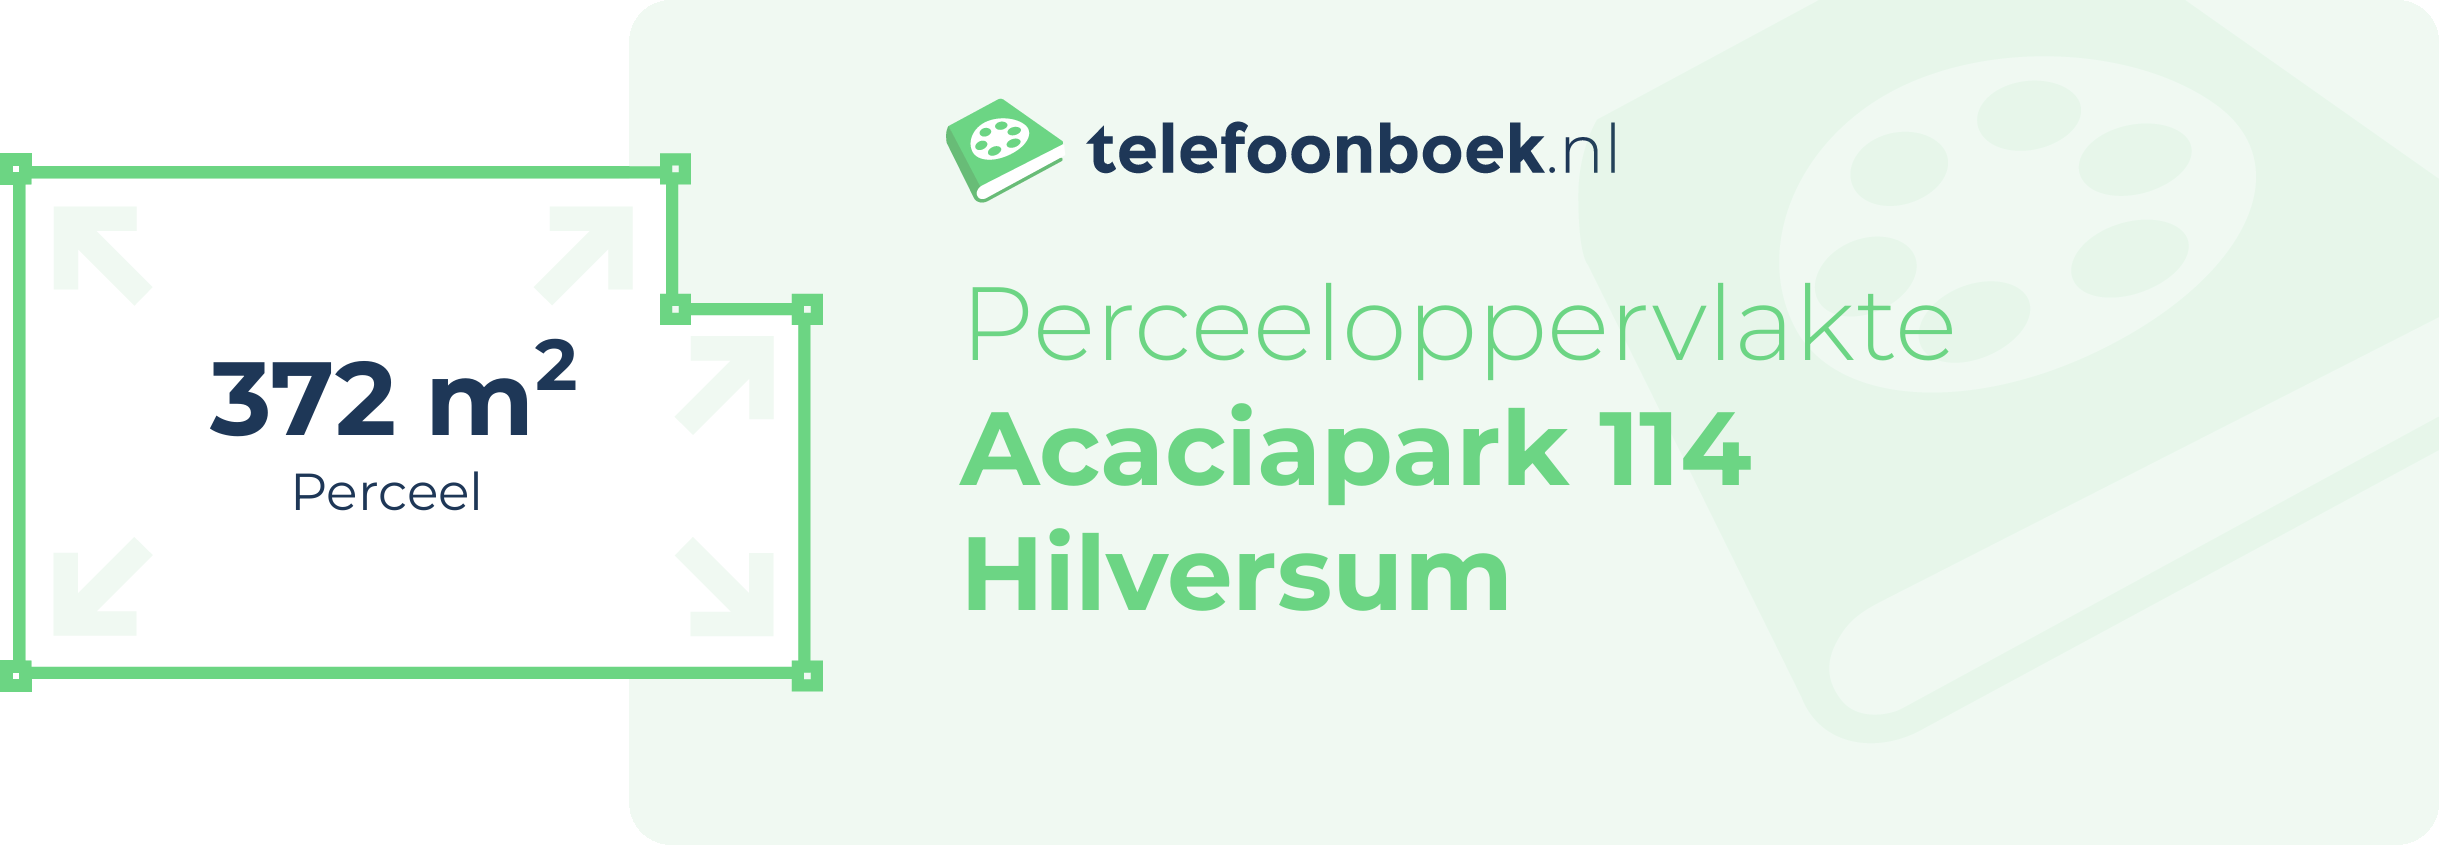 Perceeloppervlakte Acaciapark 114 Hilversum